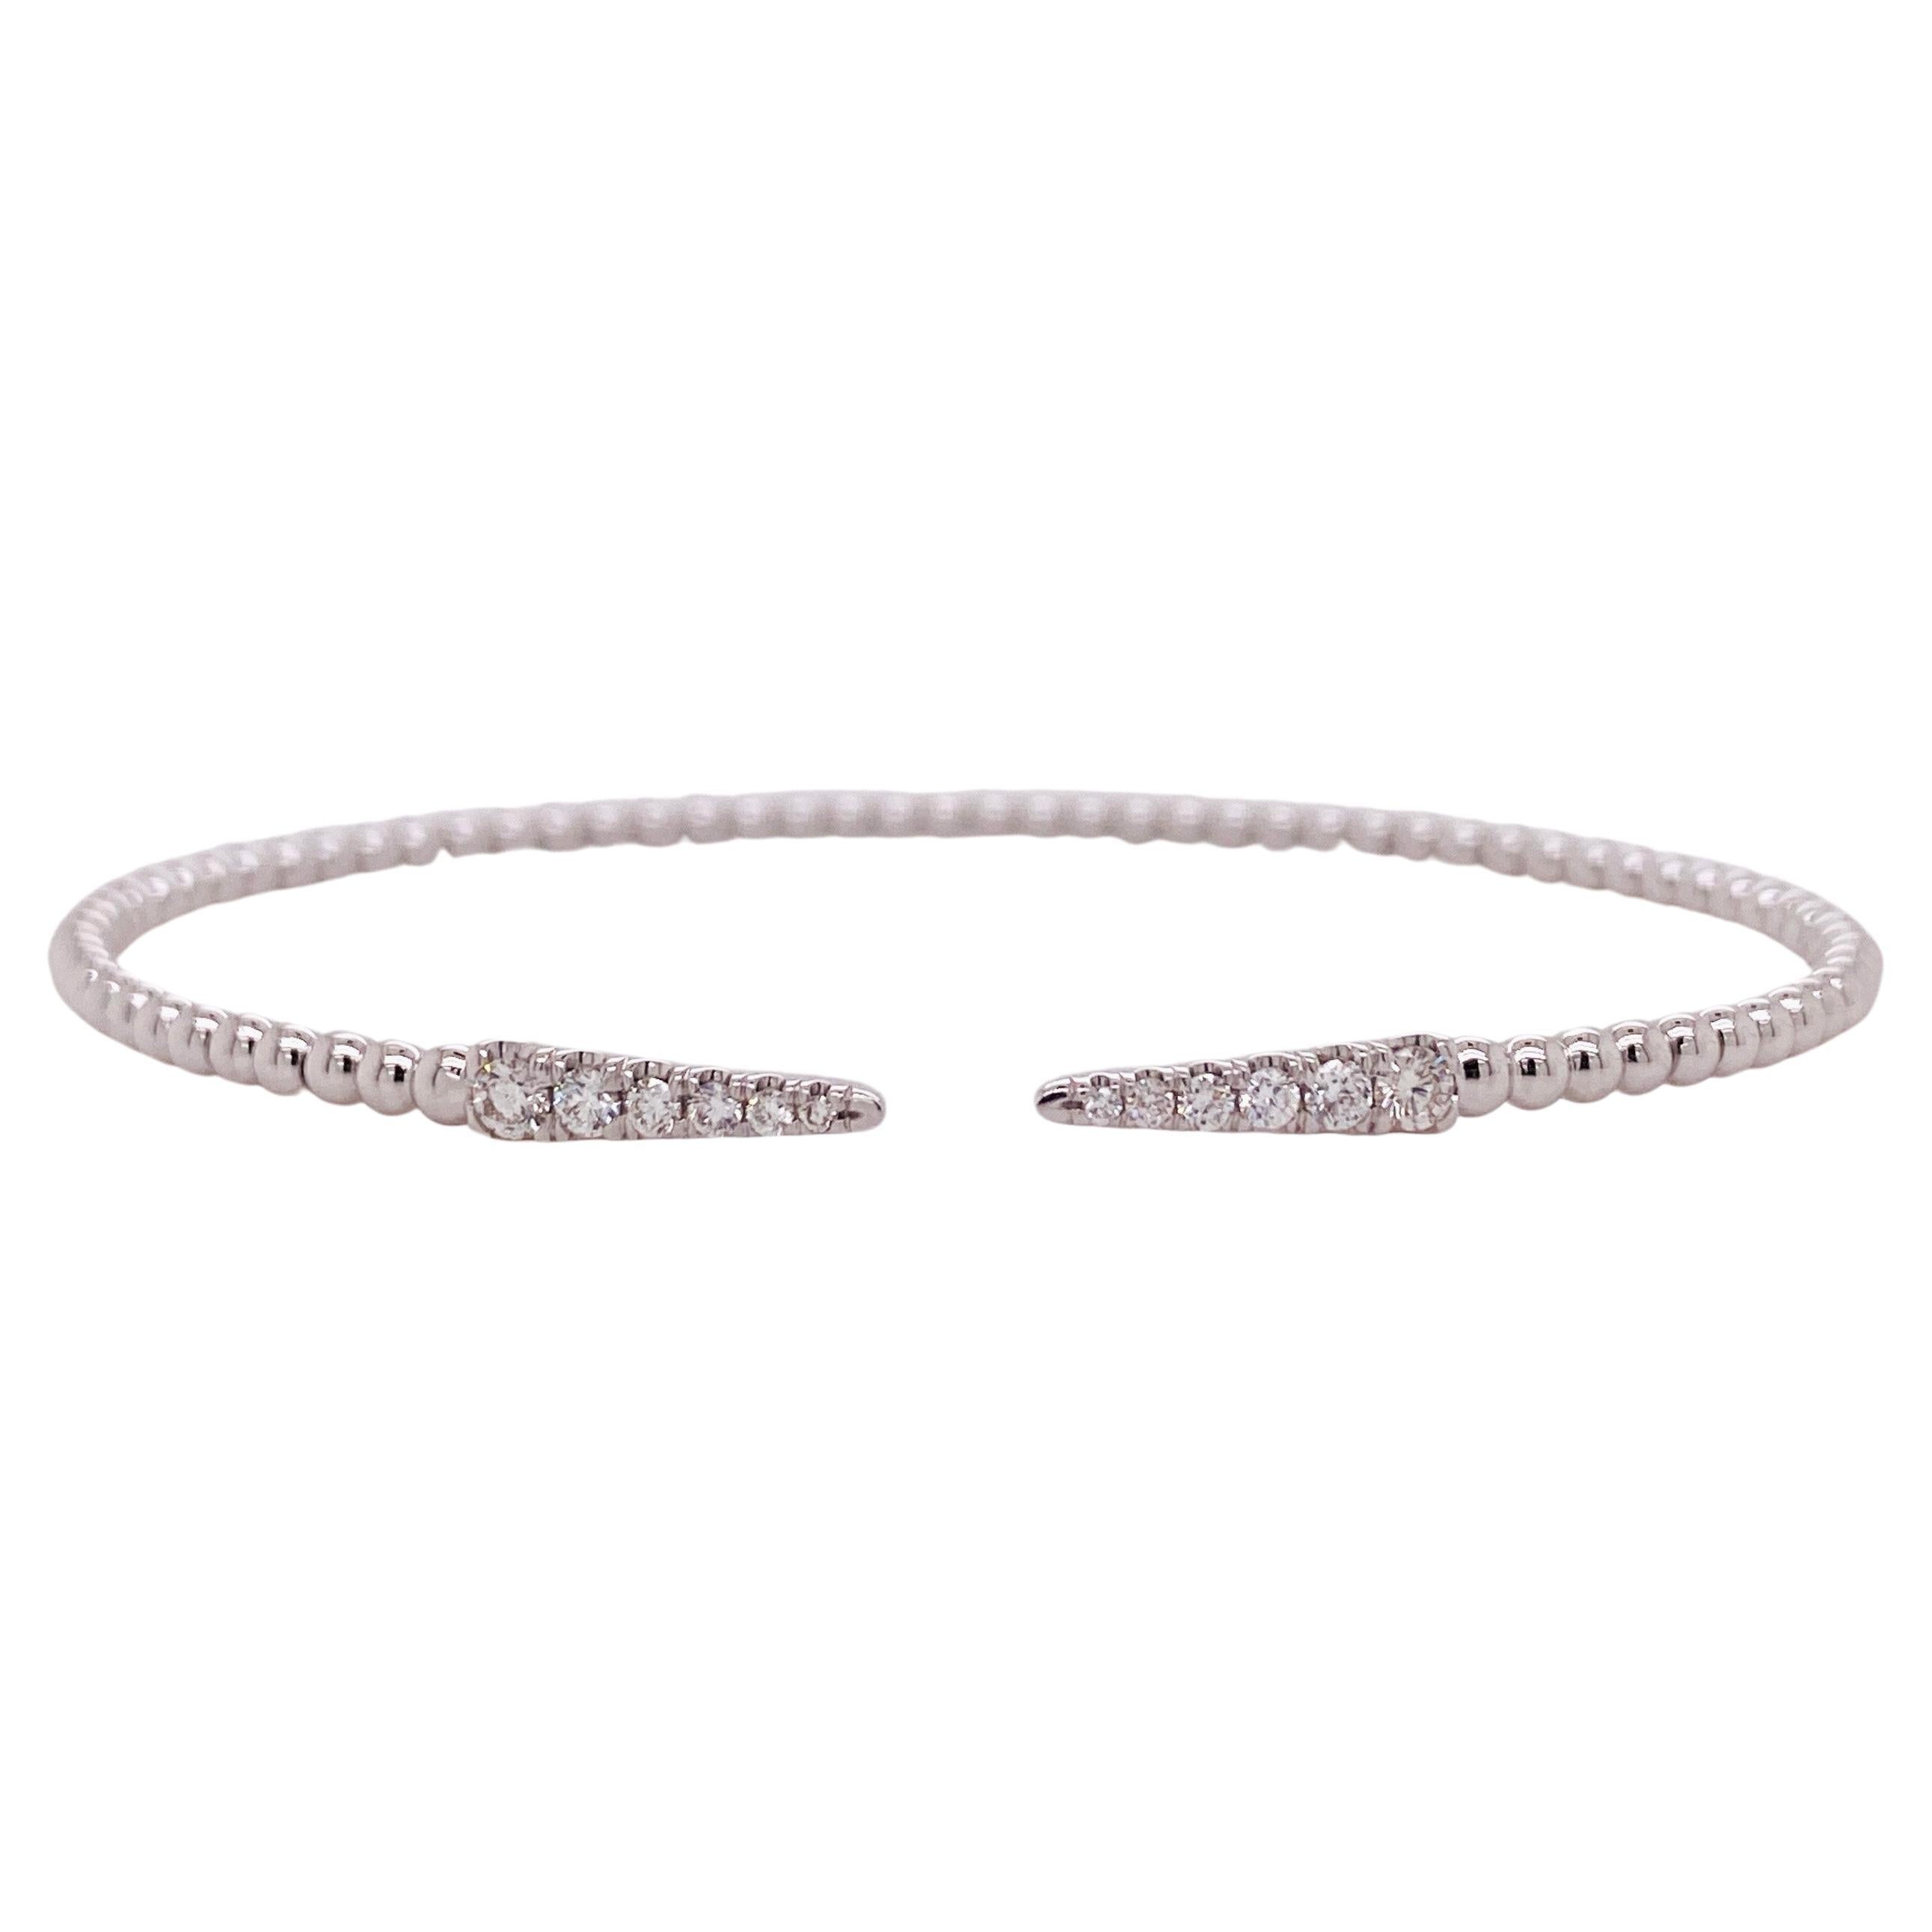 Diamond Spike Bracelet Flexible Cuff Bangle, .26 Carats BG4216-62W45JJ LV 14kt For Sale